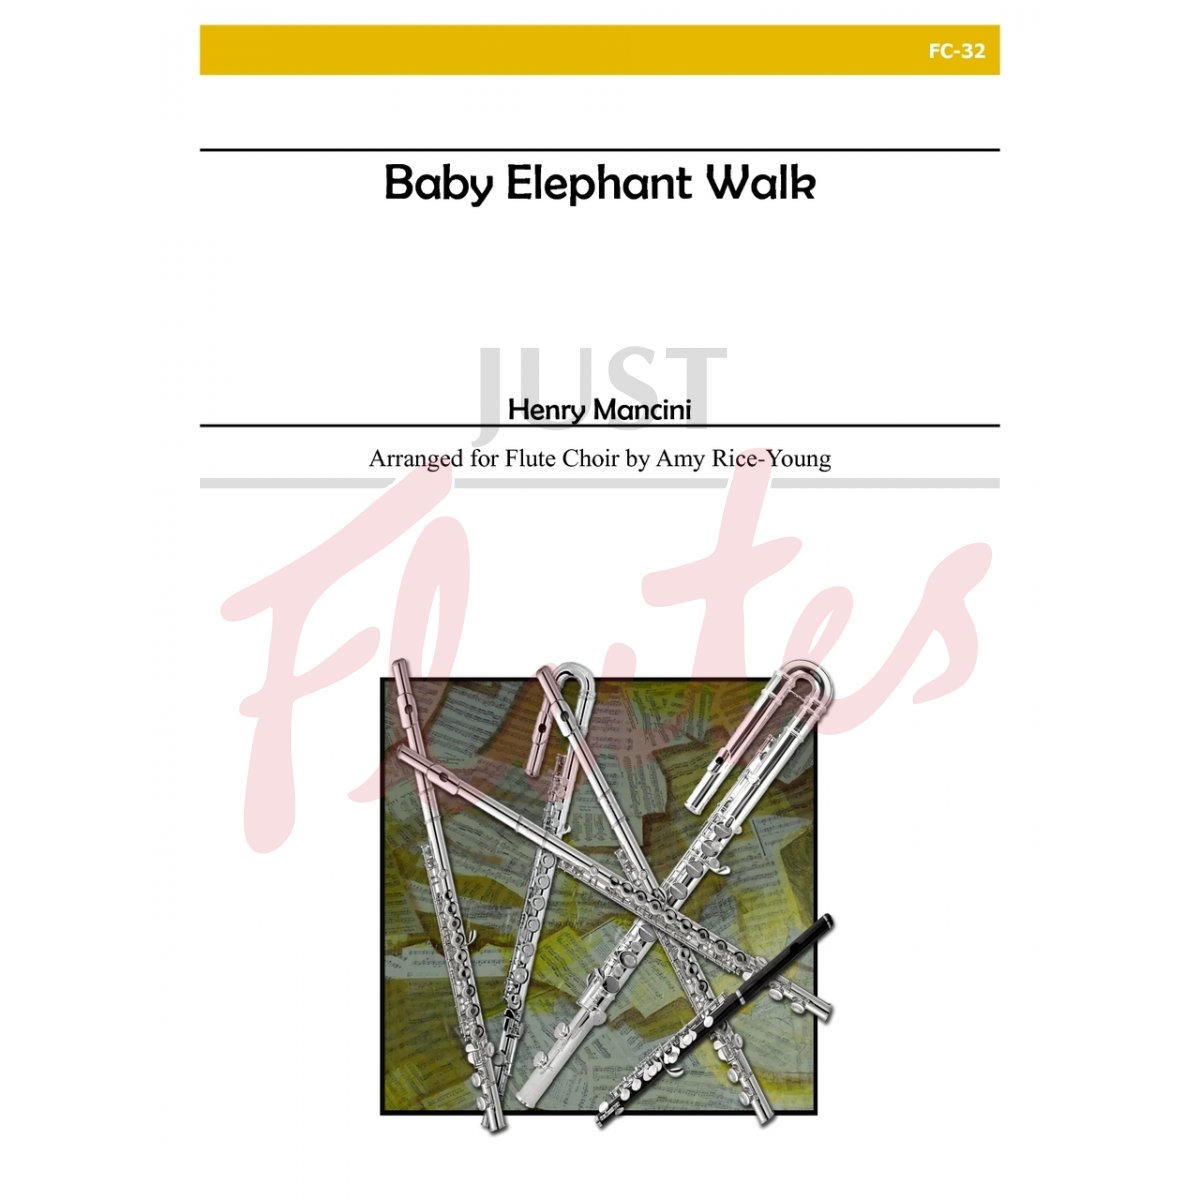 Baby Elephant Walk for Flute Choir